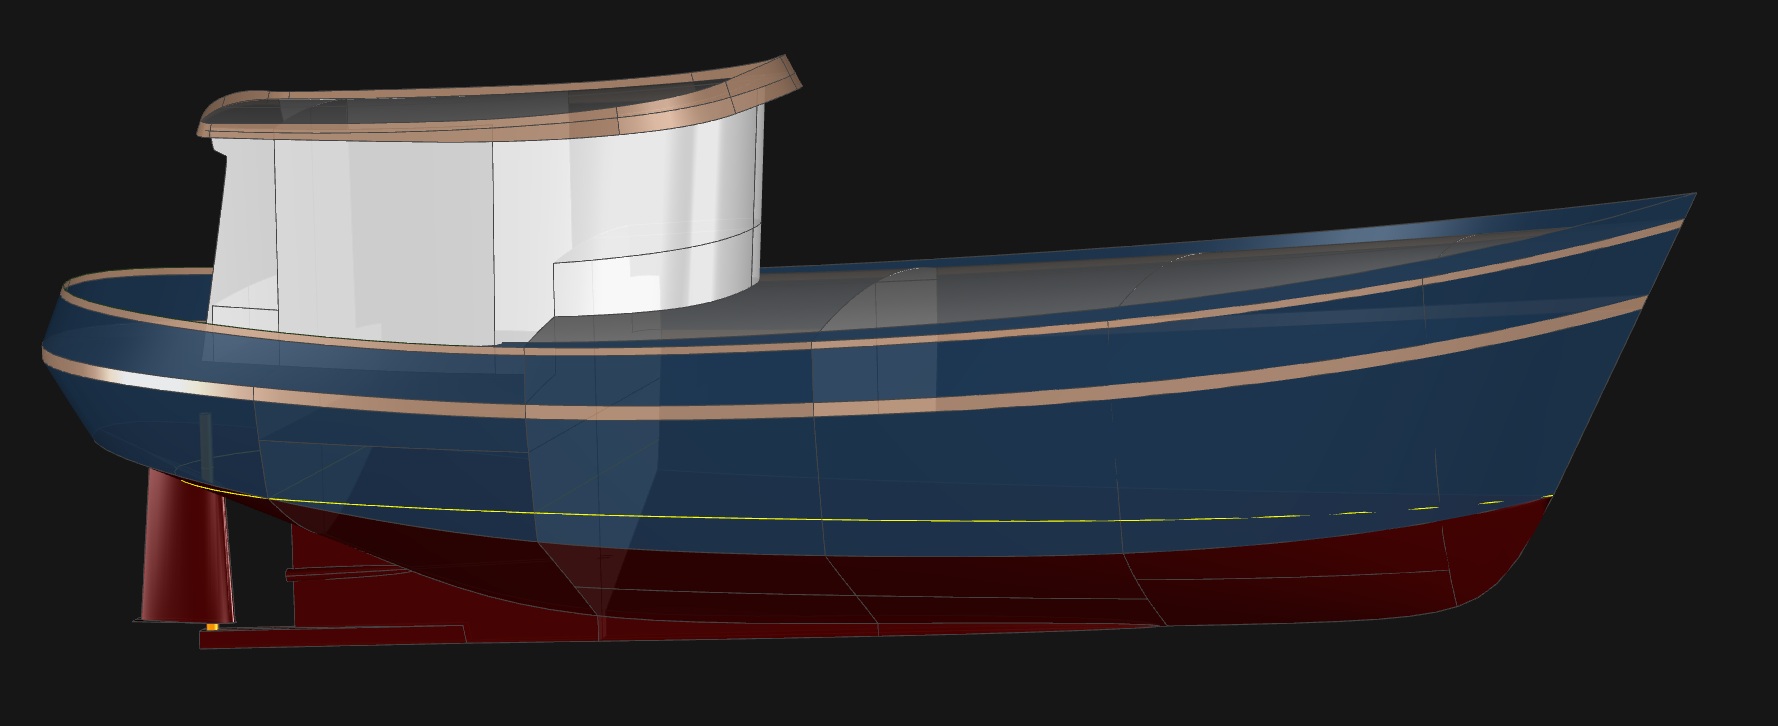 Far Horizon 40 - A Trawler Yacht by Kasten Marine Design, Inc.